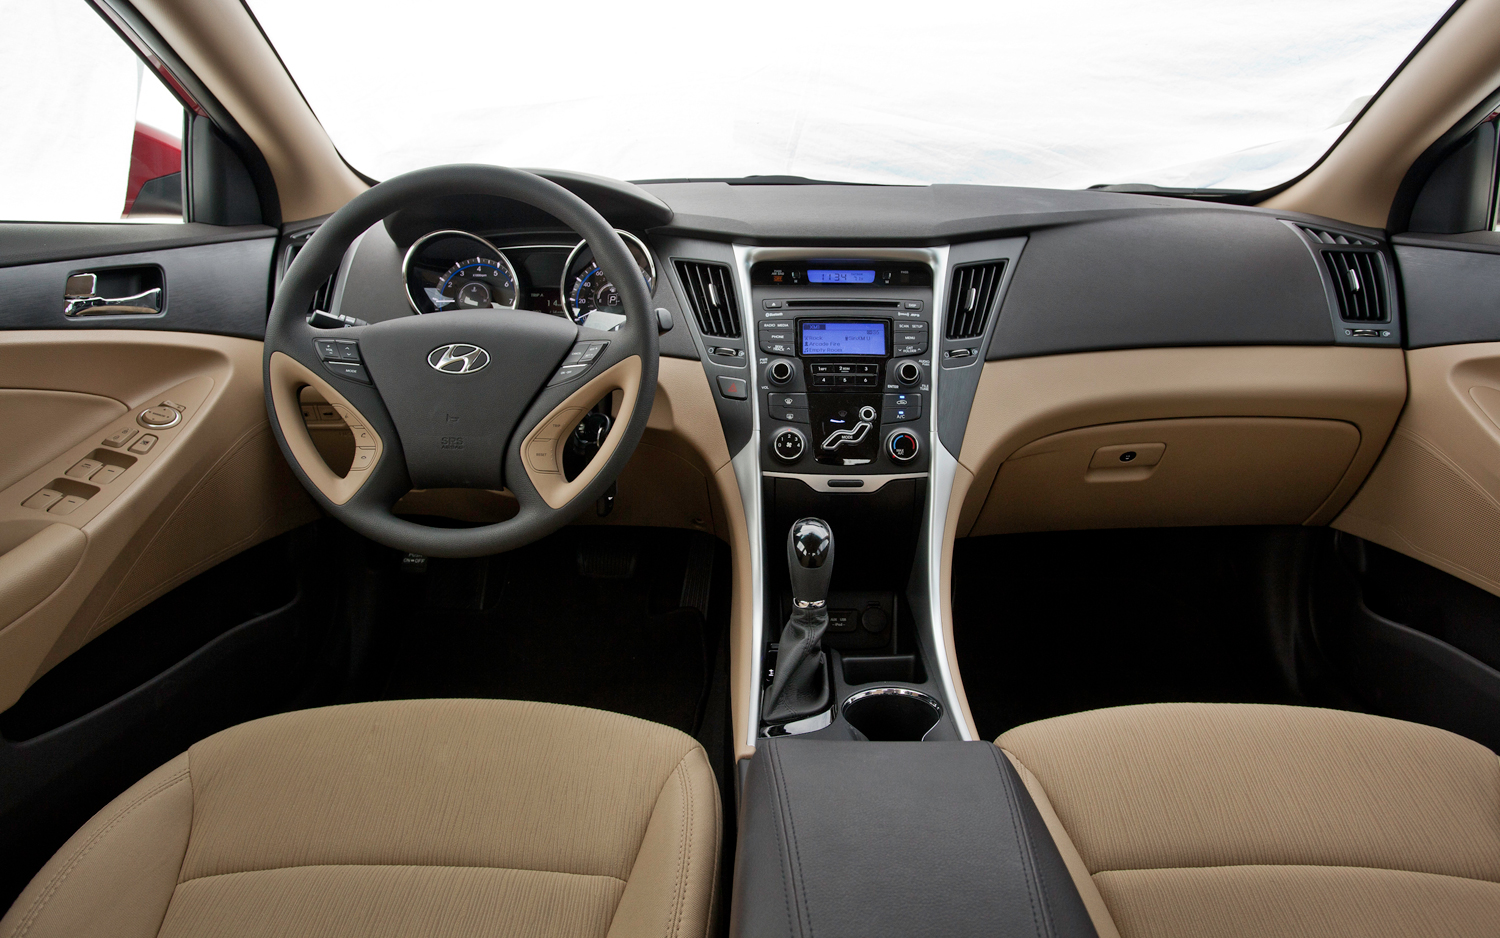 2012 Hyundai Sonata Information And Photos Momentcar